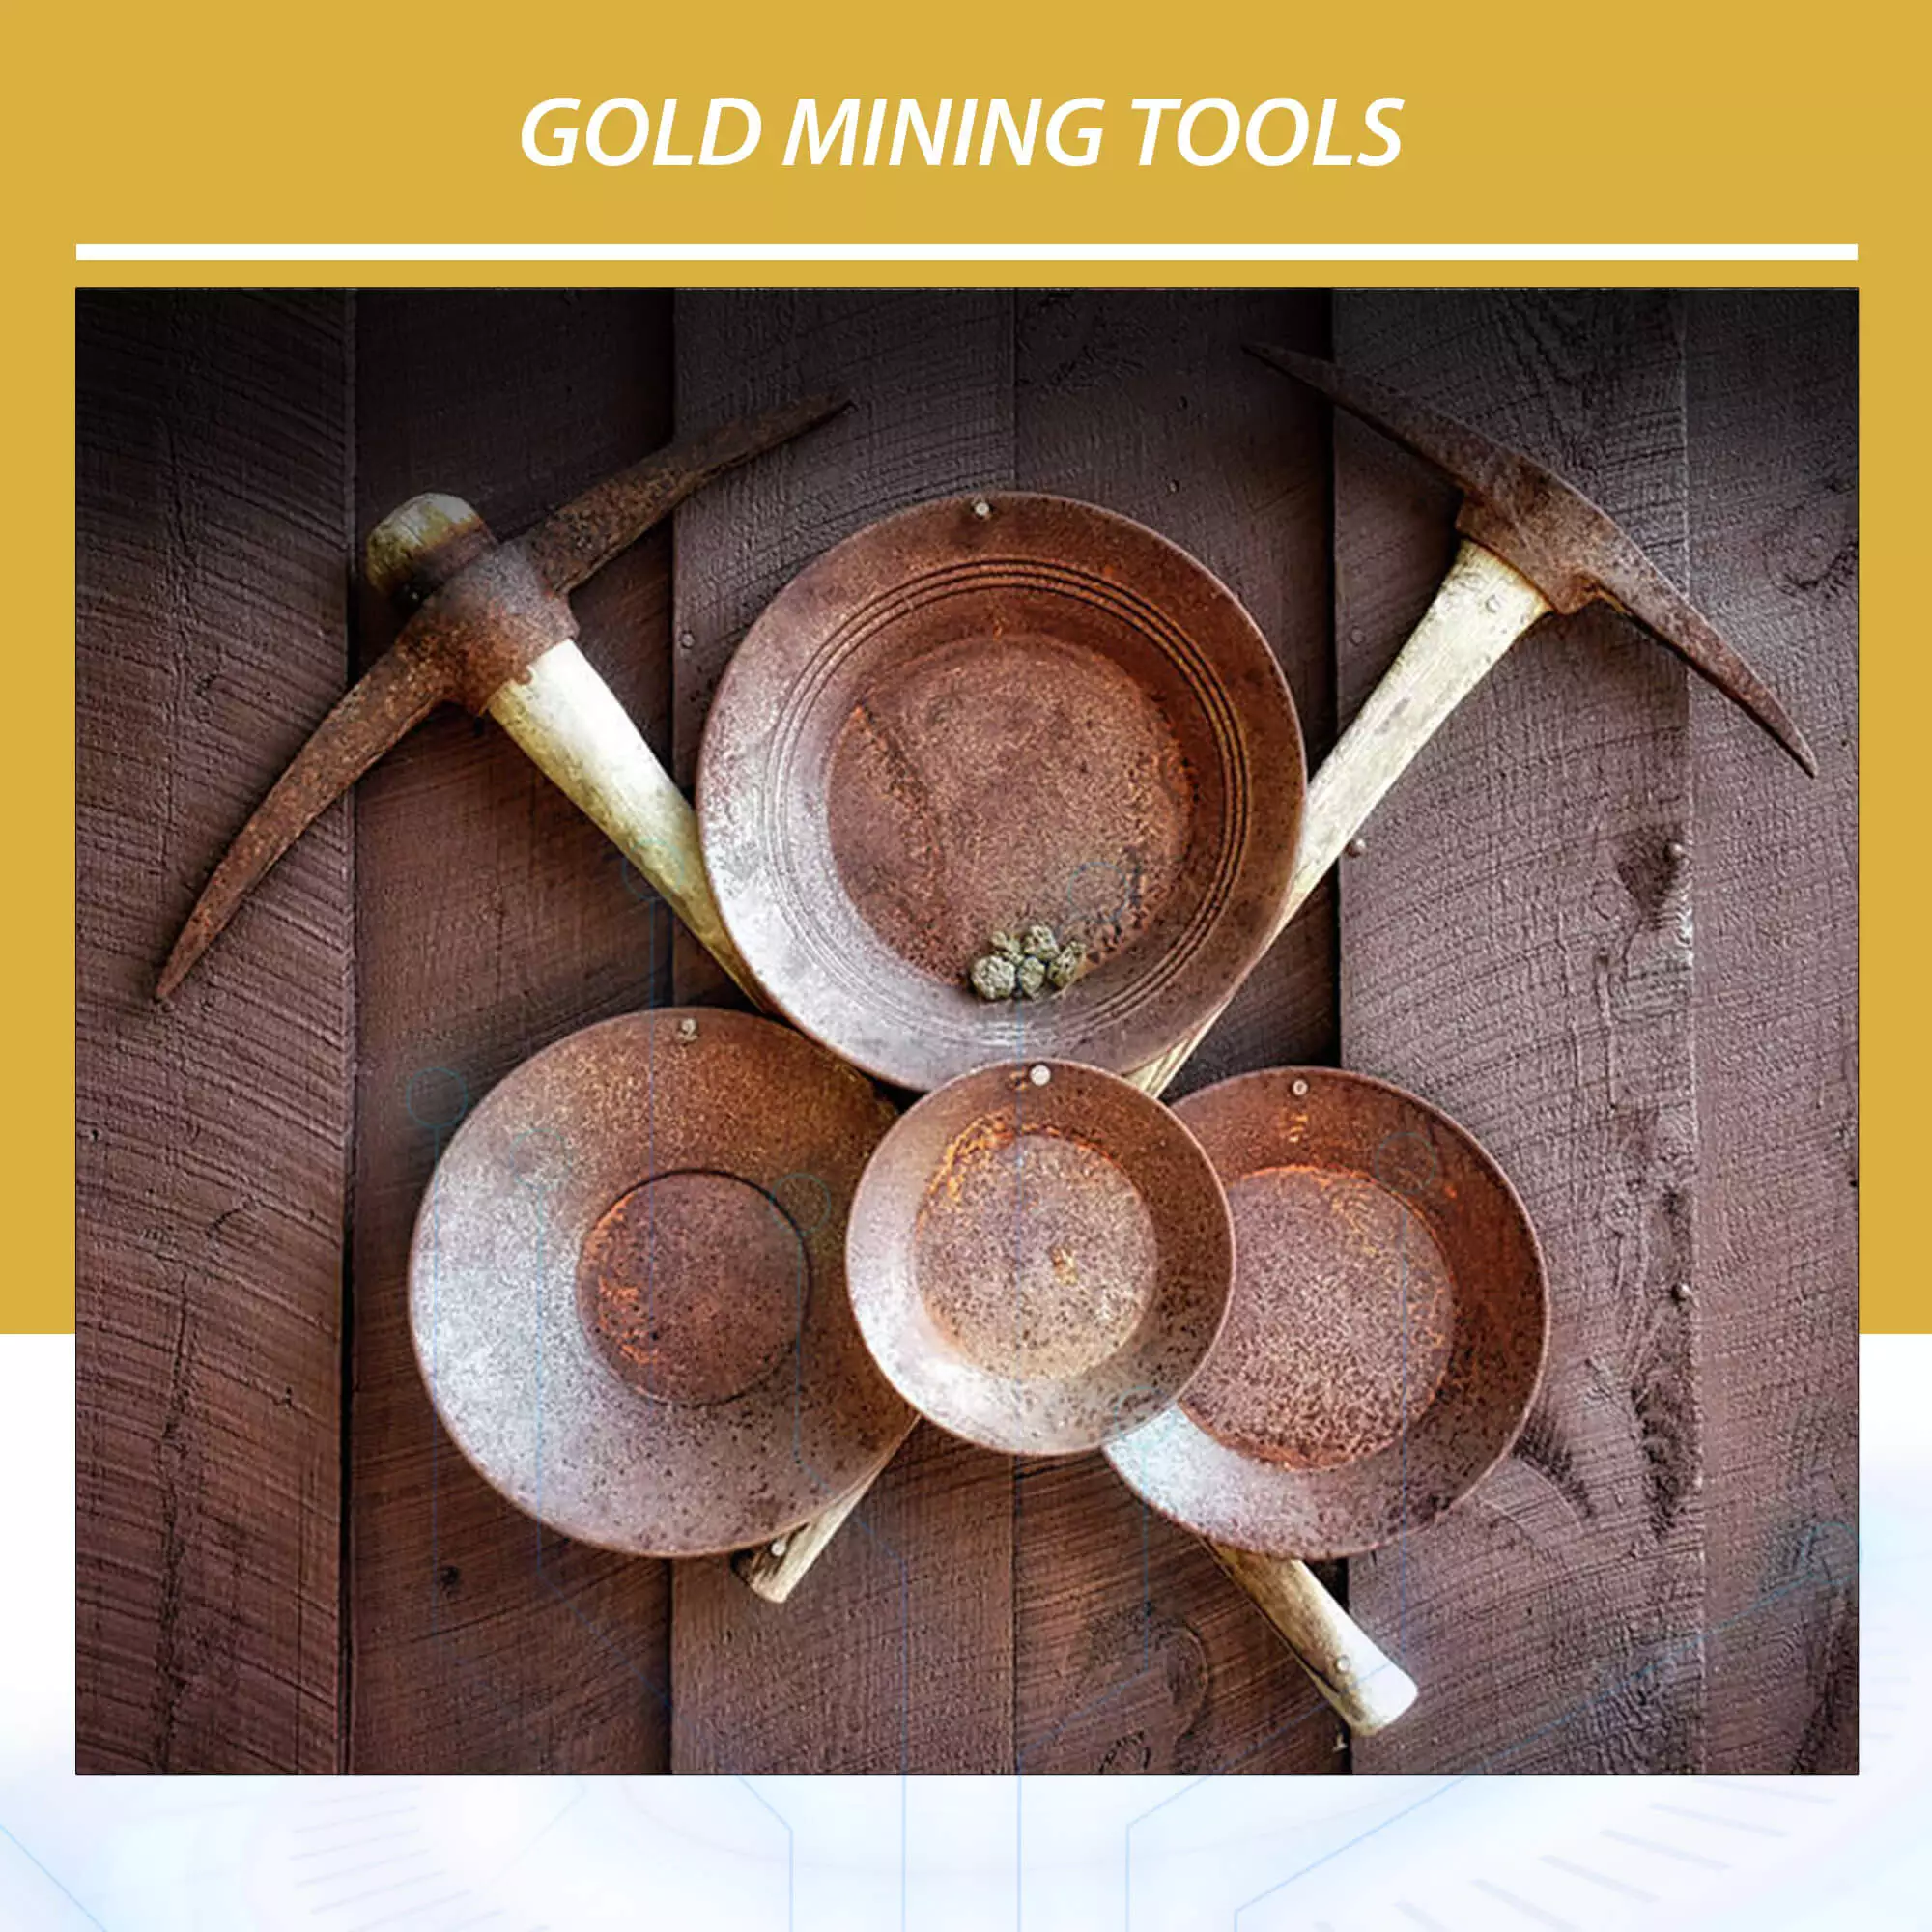 Gold mining tools